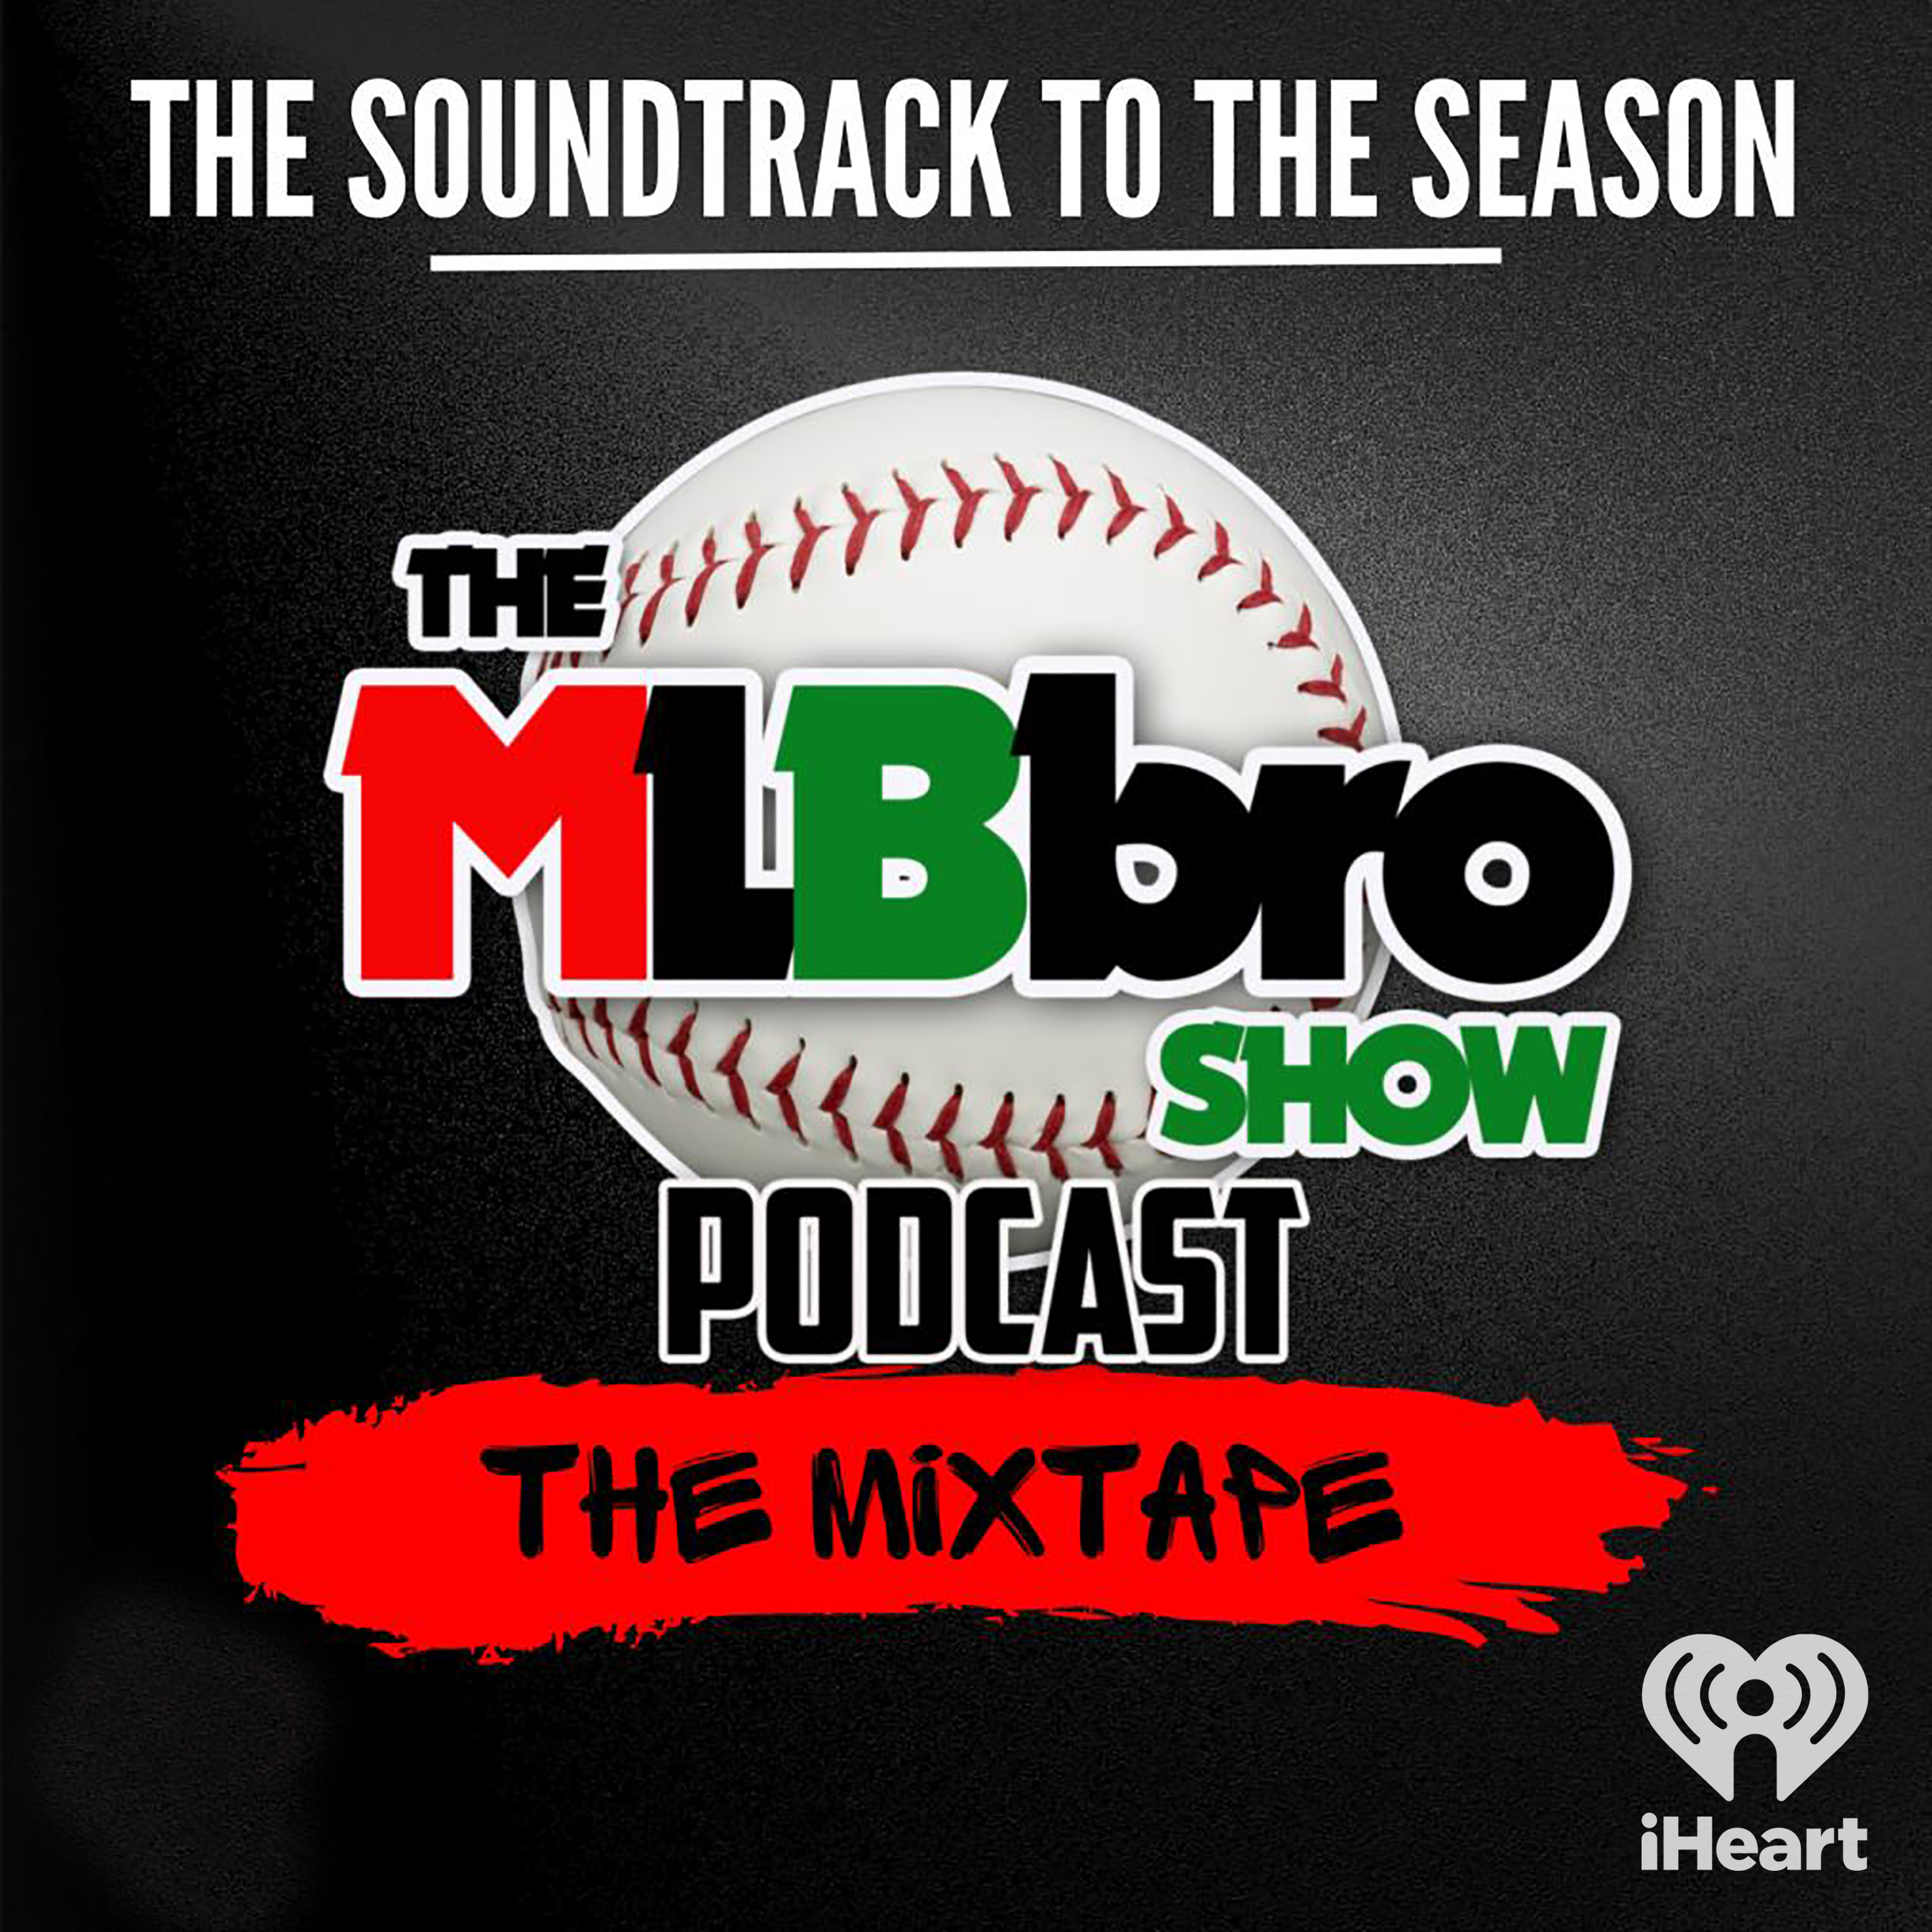 MLBbro Show Podcast The Mixtape Vol 3 Episode 15